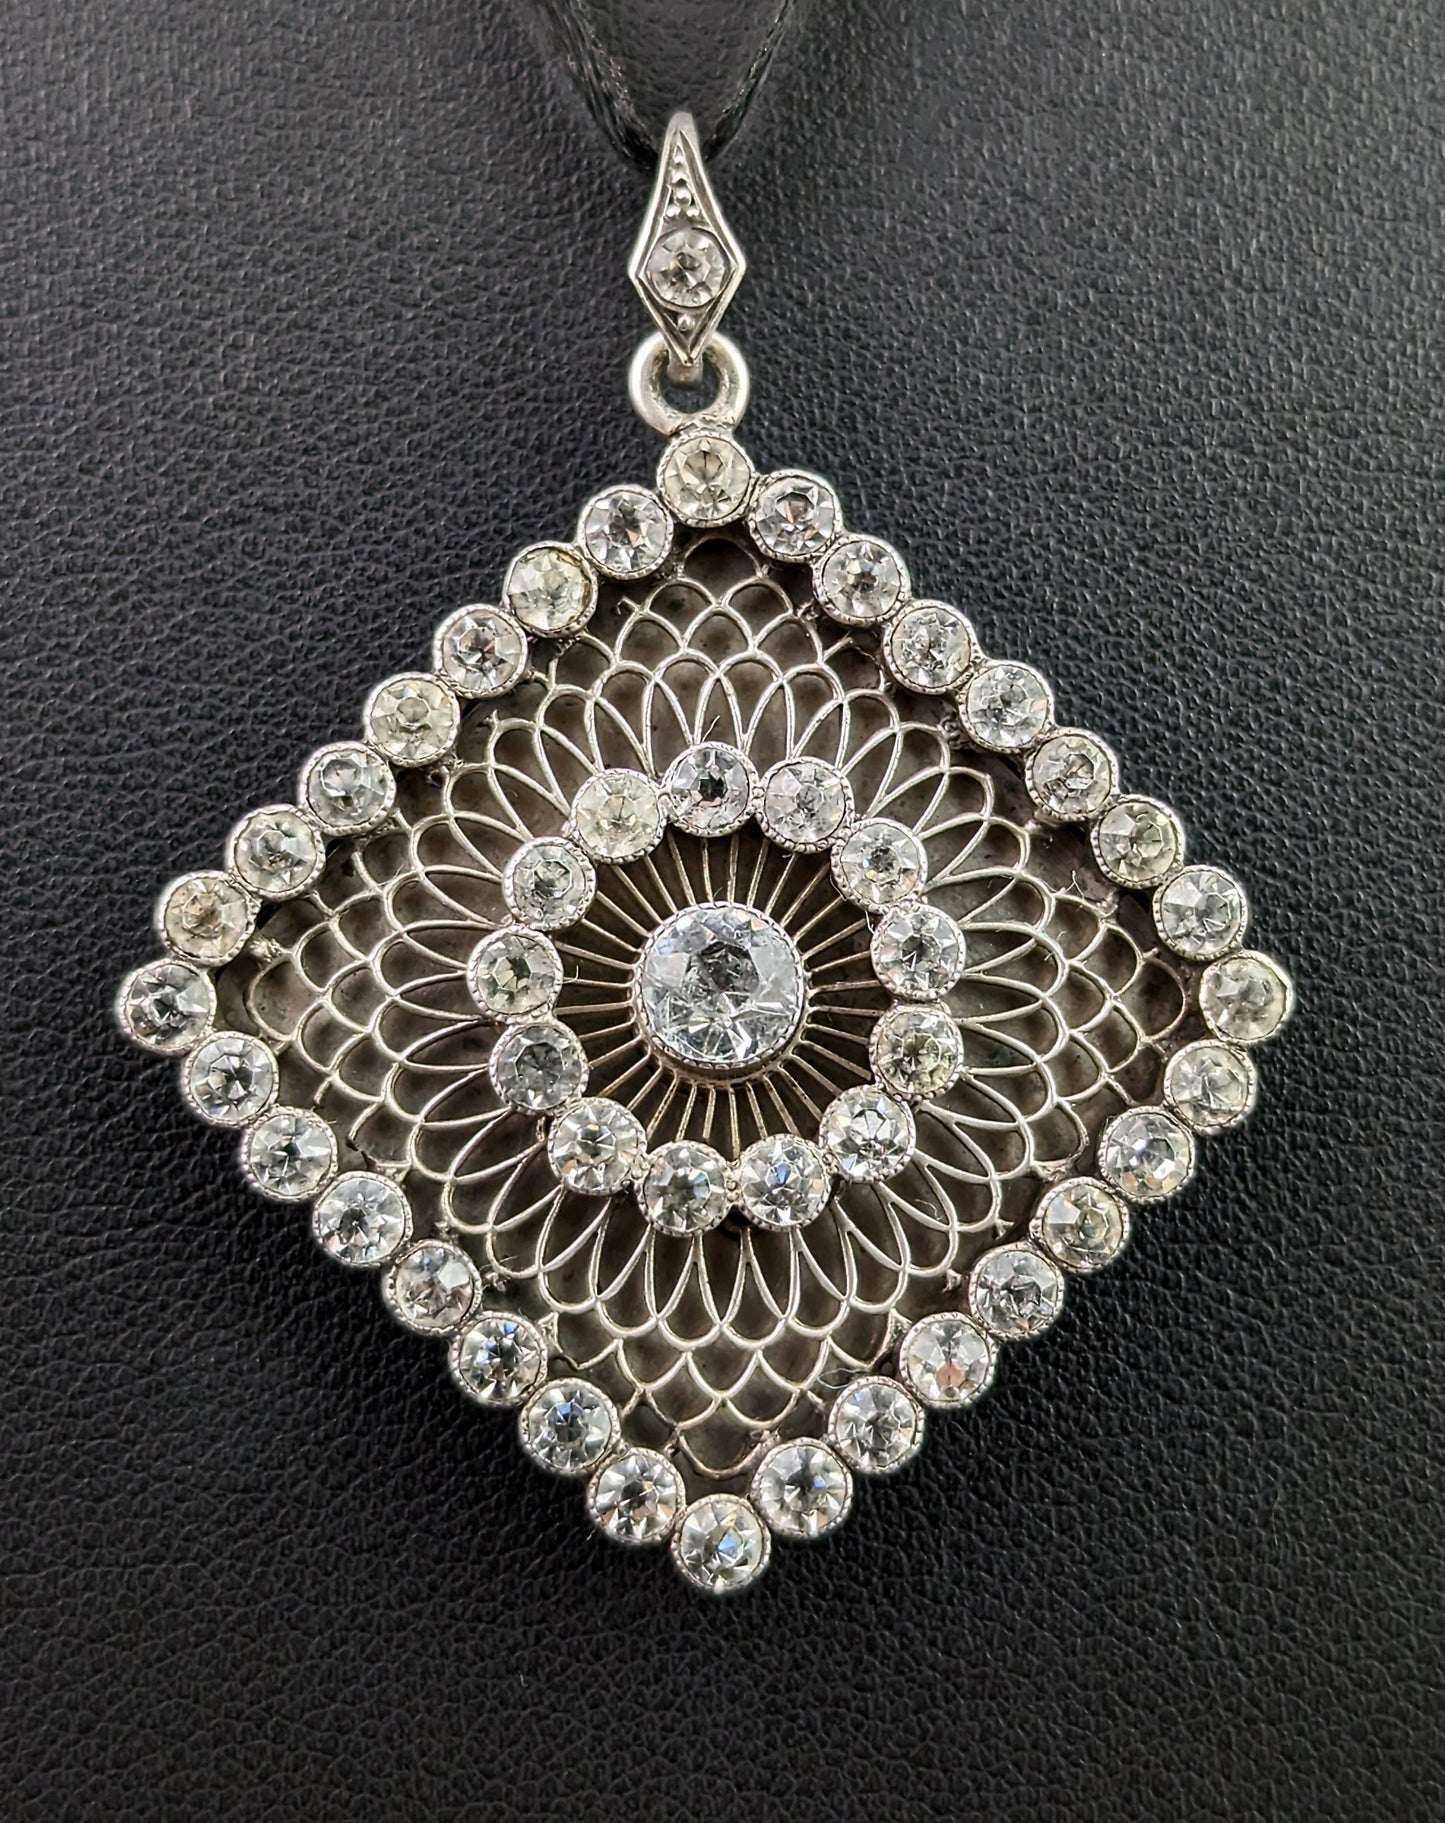 Antique French silver and paste pendant, Diamond shape, Filigree